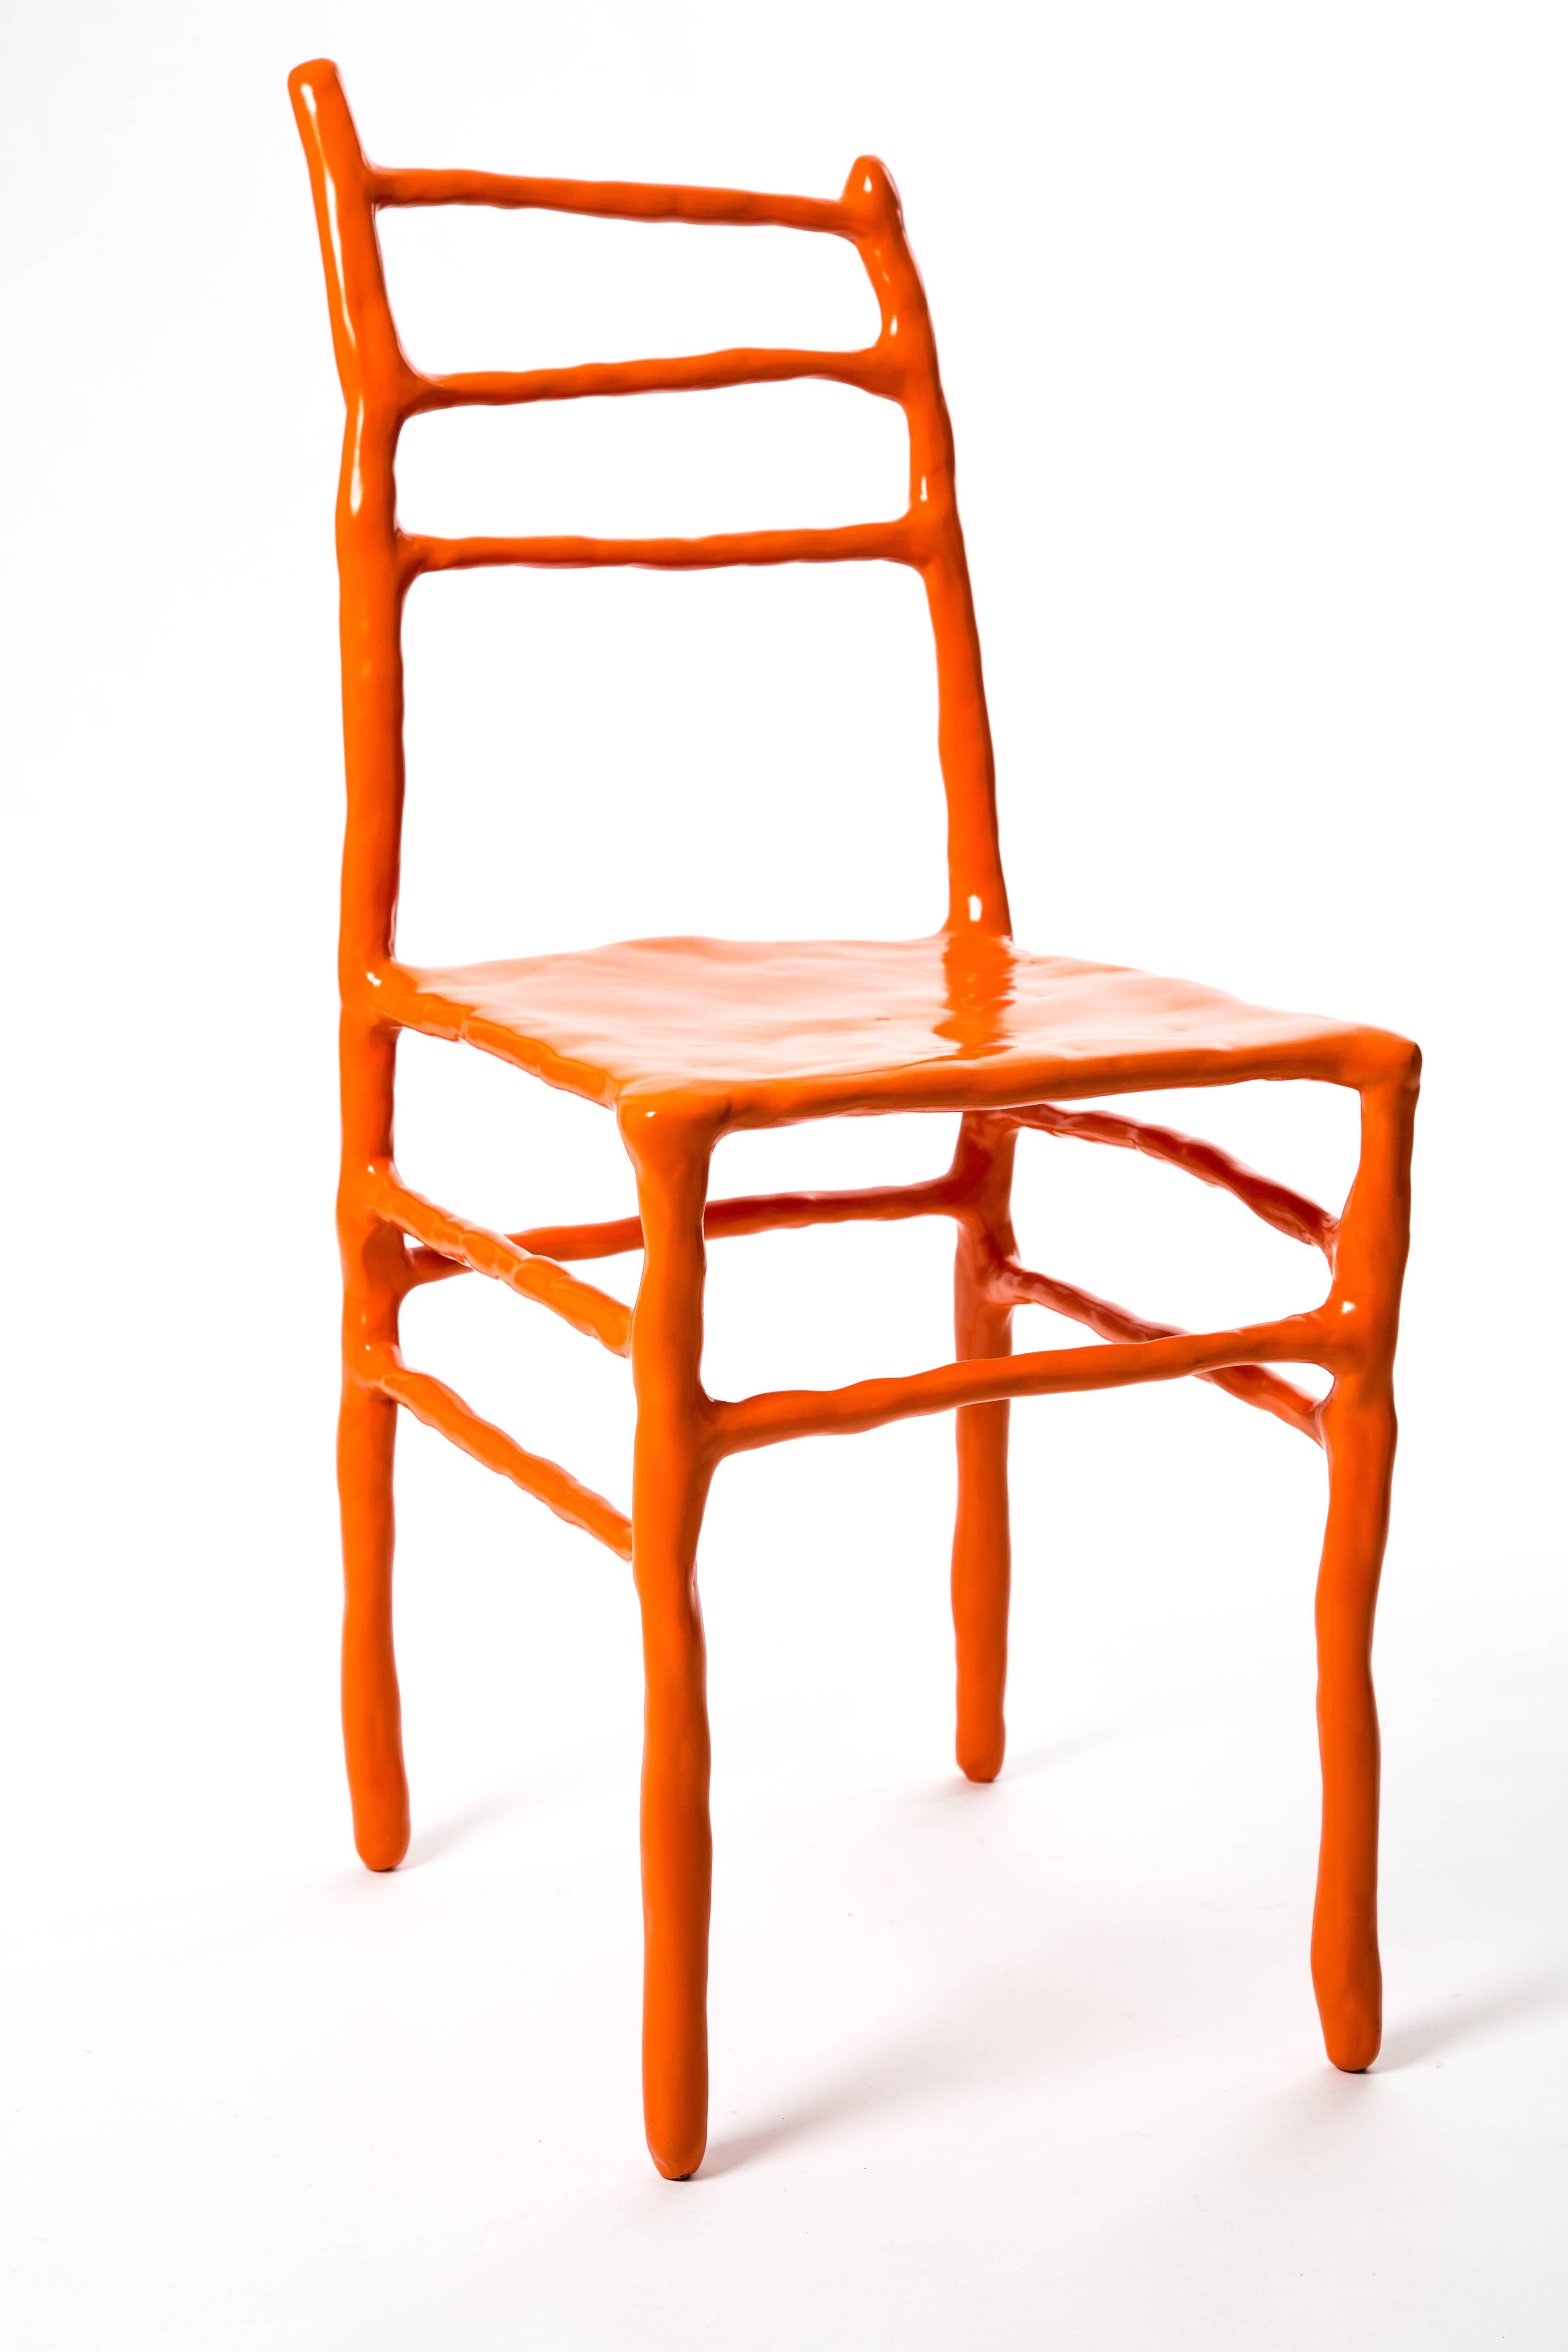 Maarten Baas Clay Chair Limited Edition Basel Chair 2007 Orange For Sale 6